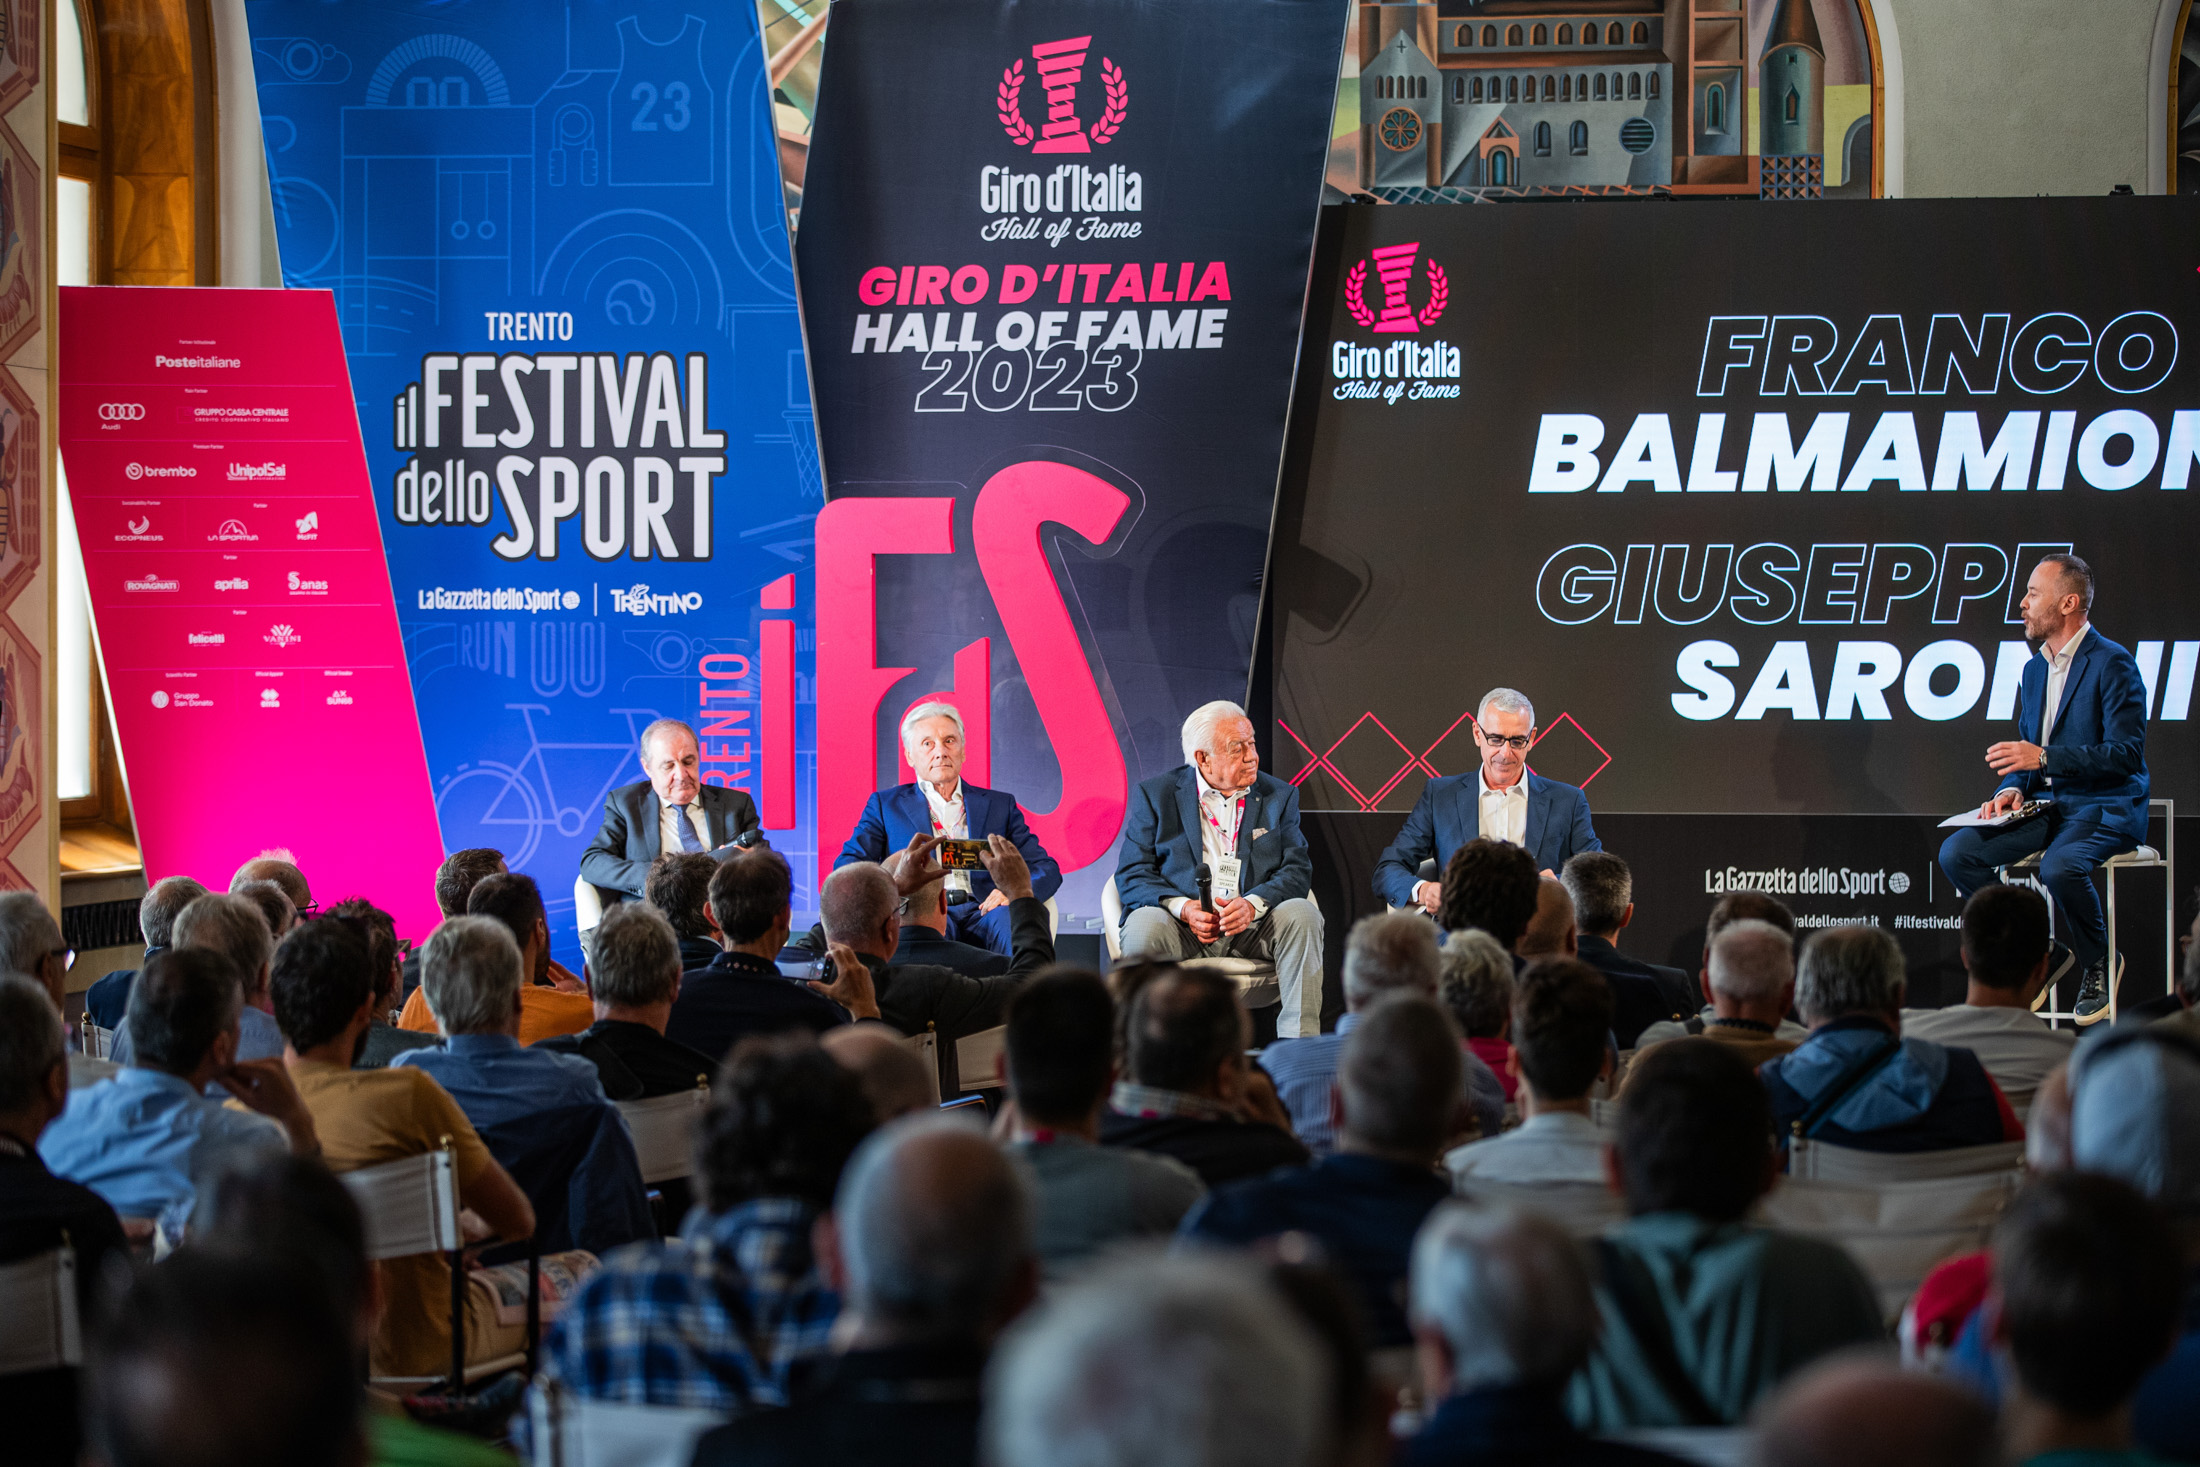 Hall Of Fame Giro D’Italia Nella foto: Mauro VEGNI, Giuseppe SARONNI, Franco BALMAMION, Pier BERGONZI, Antonino MORICI, pubblico